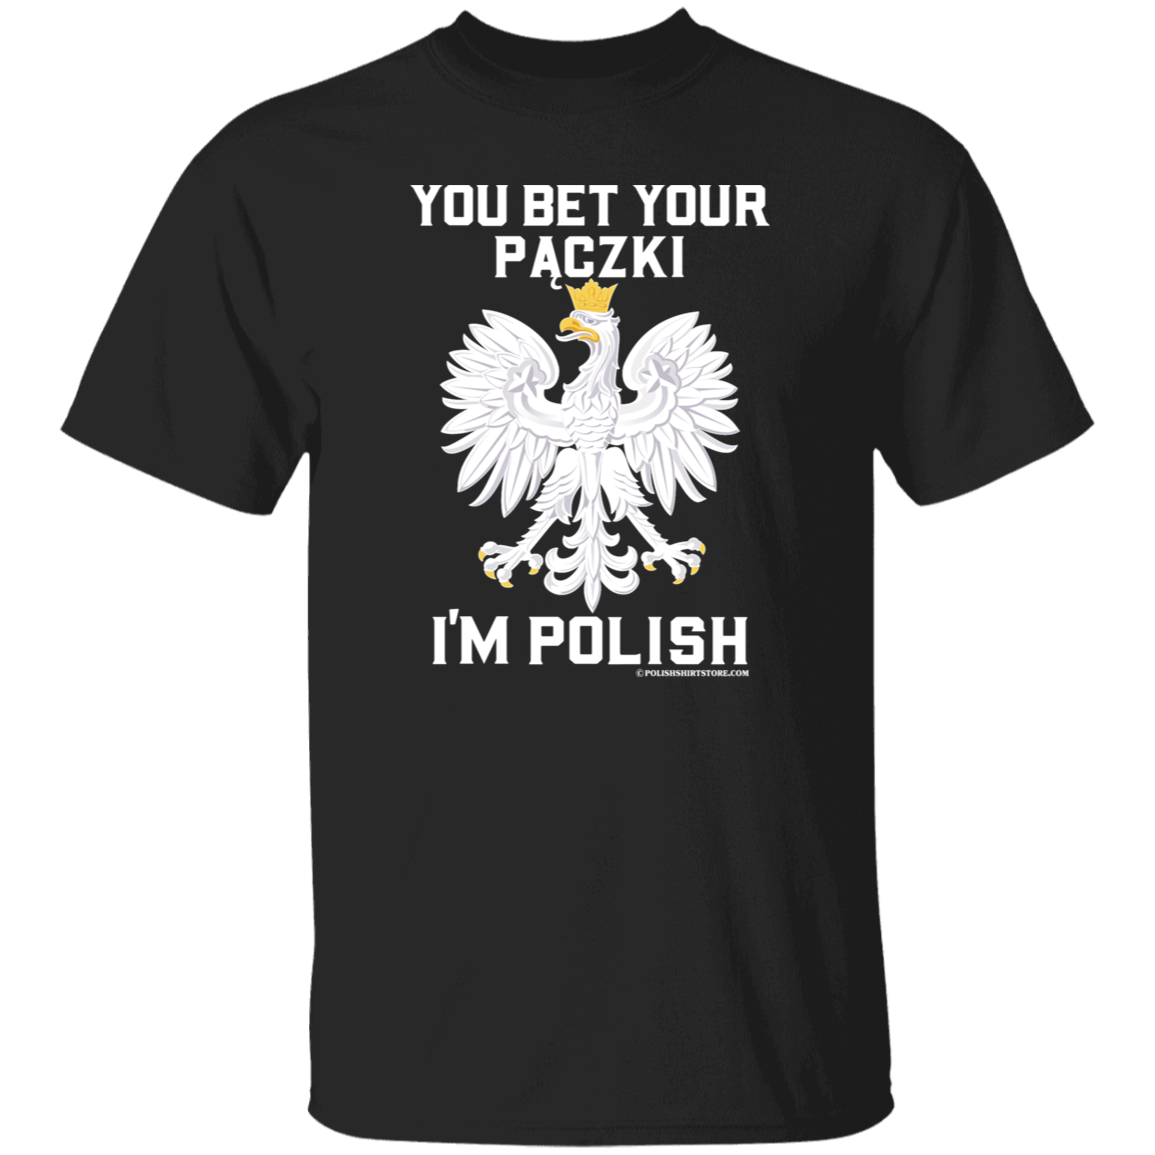 You Bet Your Paczki I'm Polish Apparel CustomCat G500 5.3 oz. T-Shirt Black S